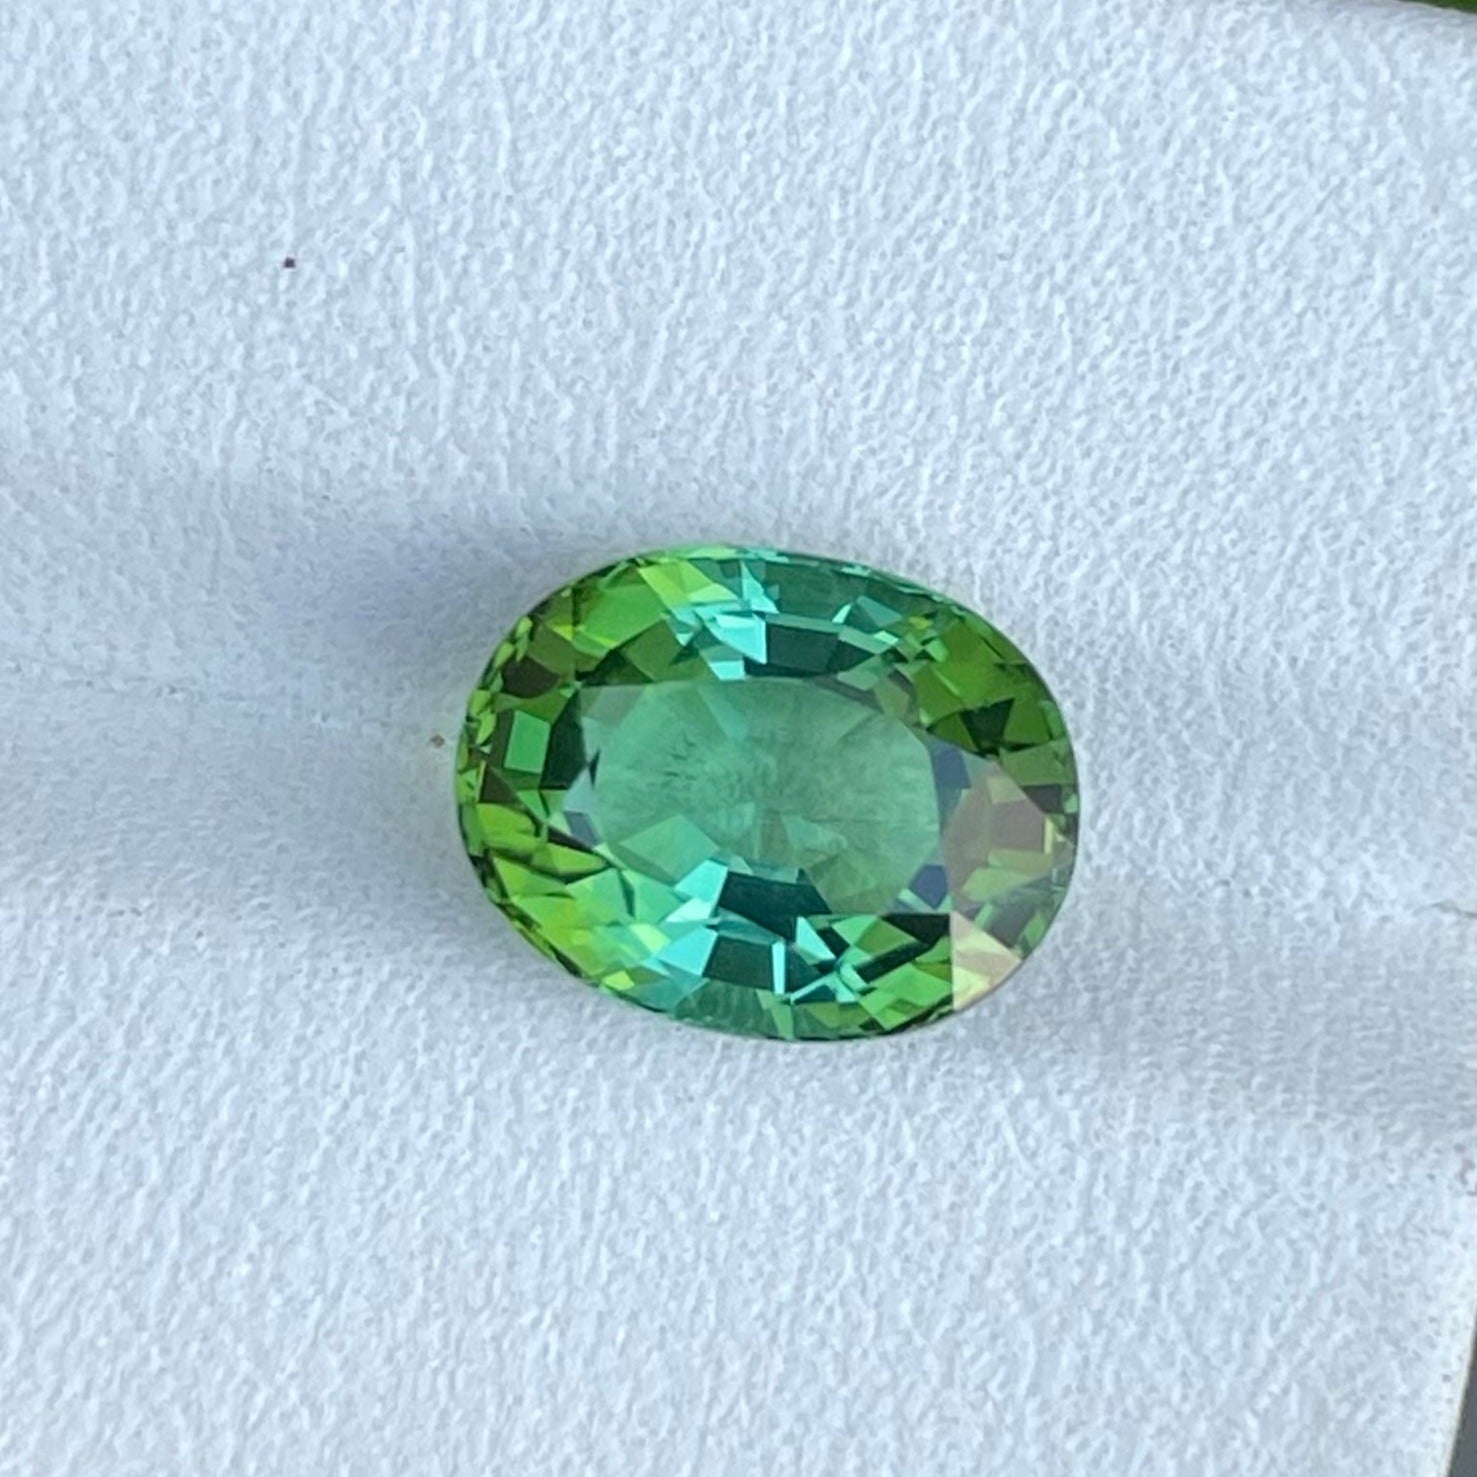 Fancy Oval Shaped Mint Green Tourmaline 4.15 carats Natural Afghani Gemstone